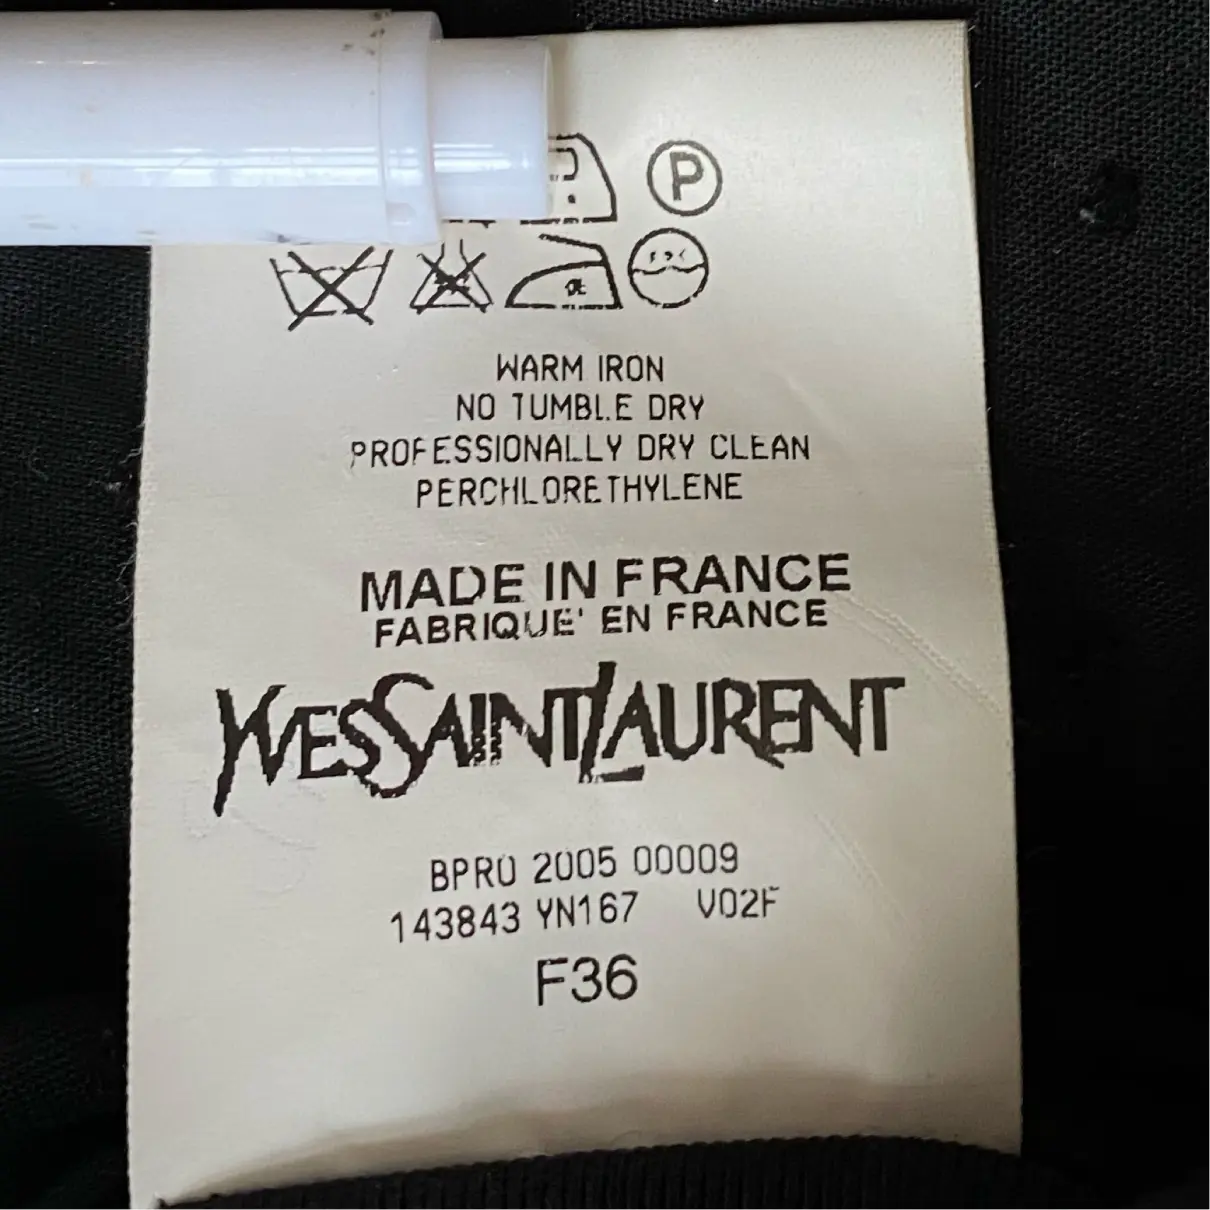 Luxury Yves Saint Laurent Jackets Women - Vintage